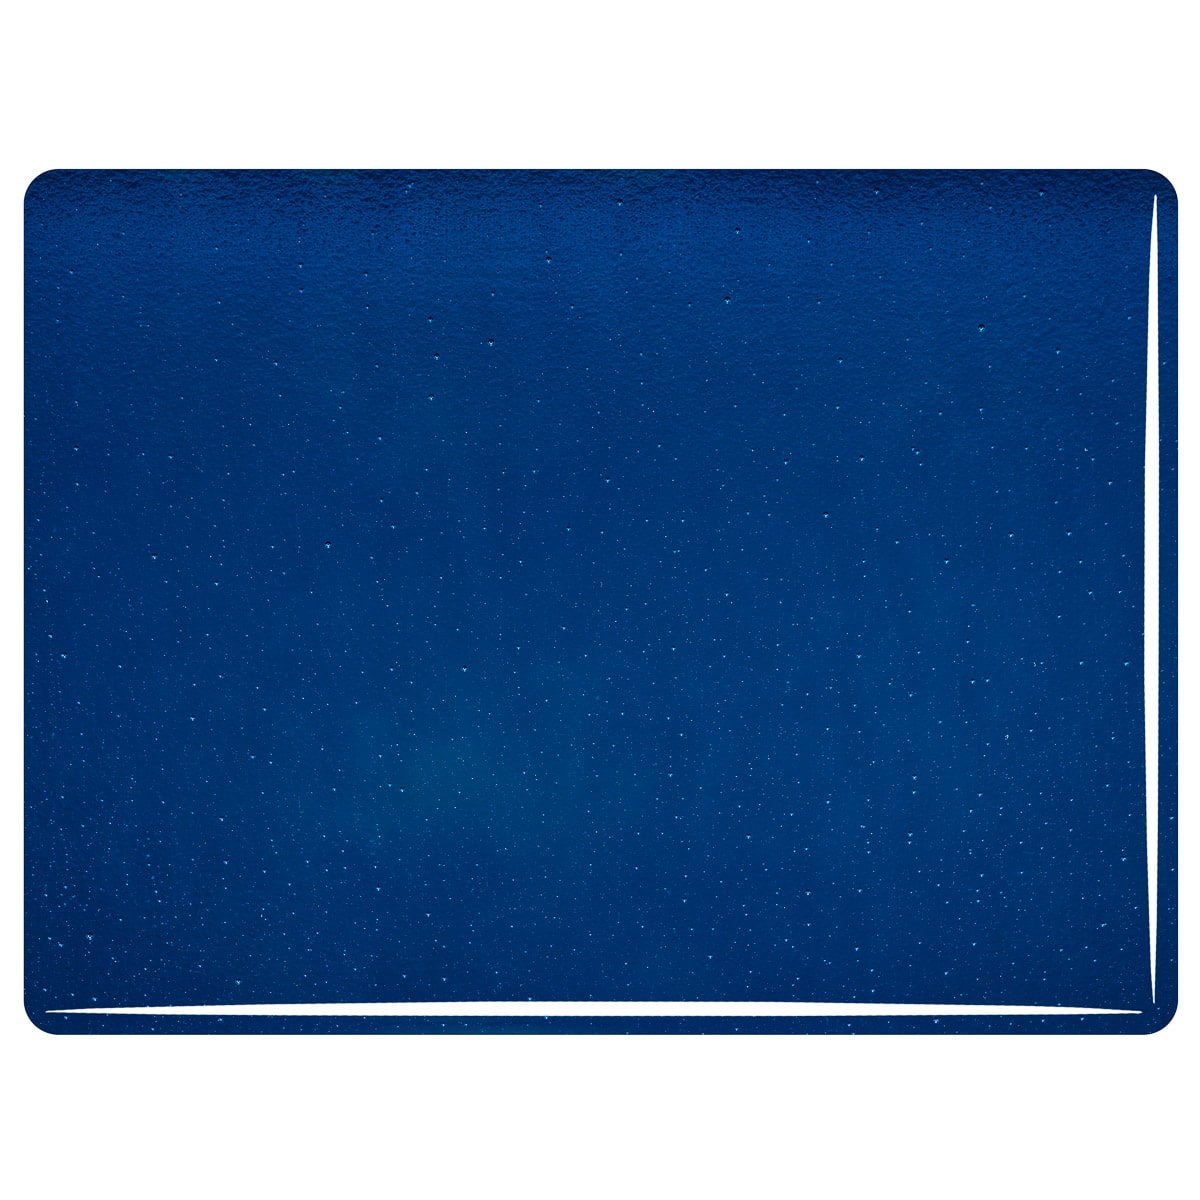 001246 Transparent Copper Blue sheet glass swatch